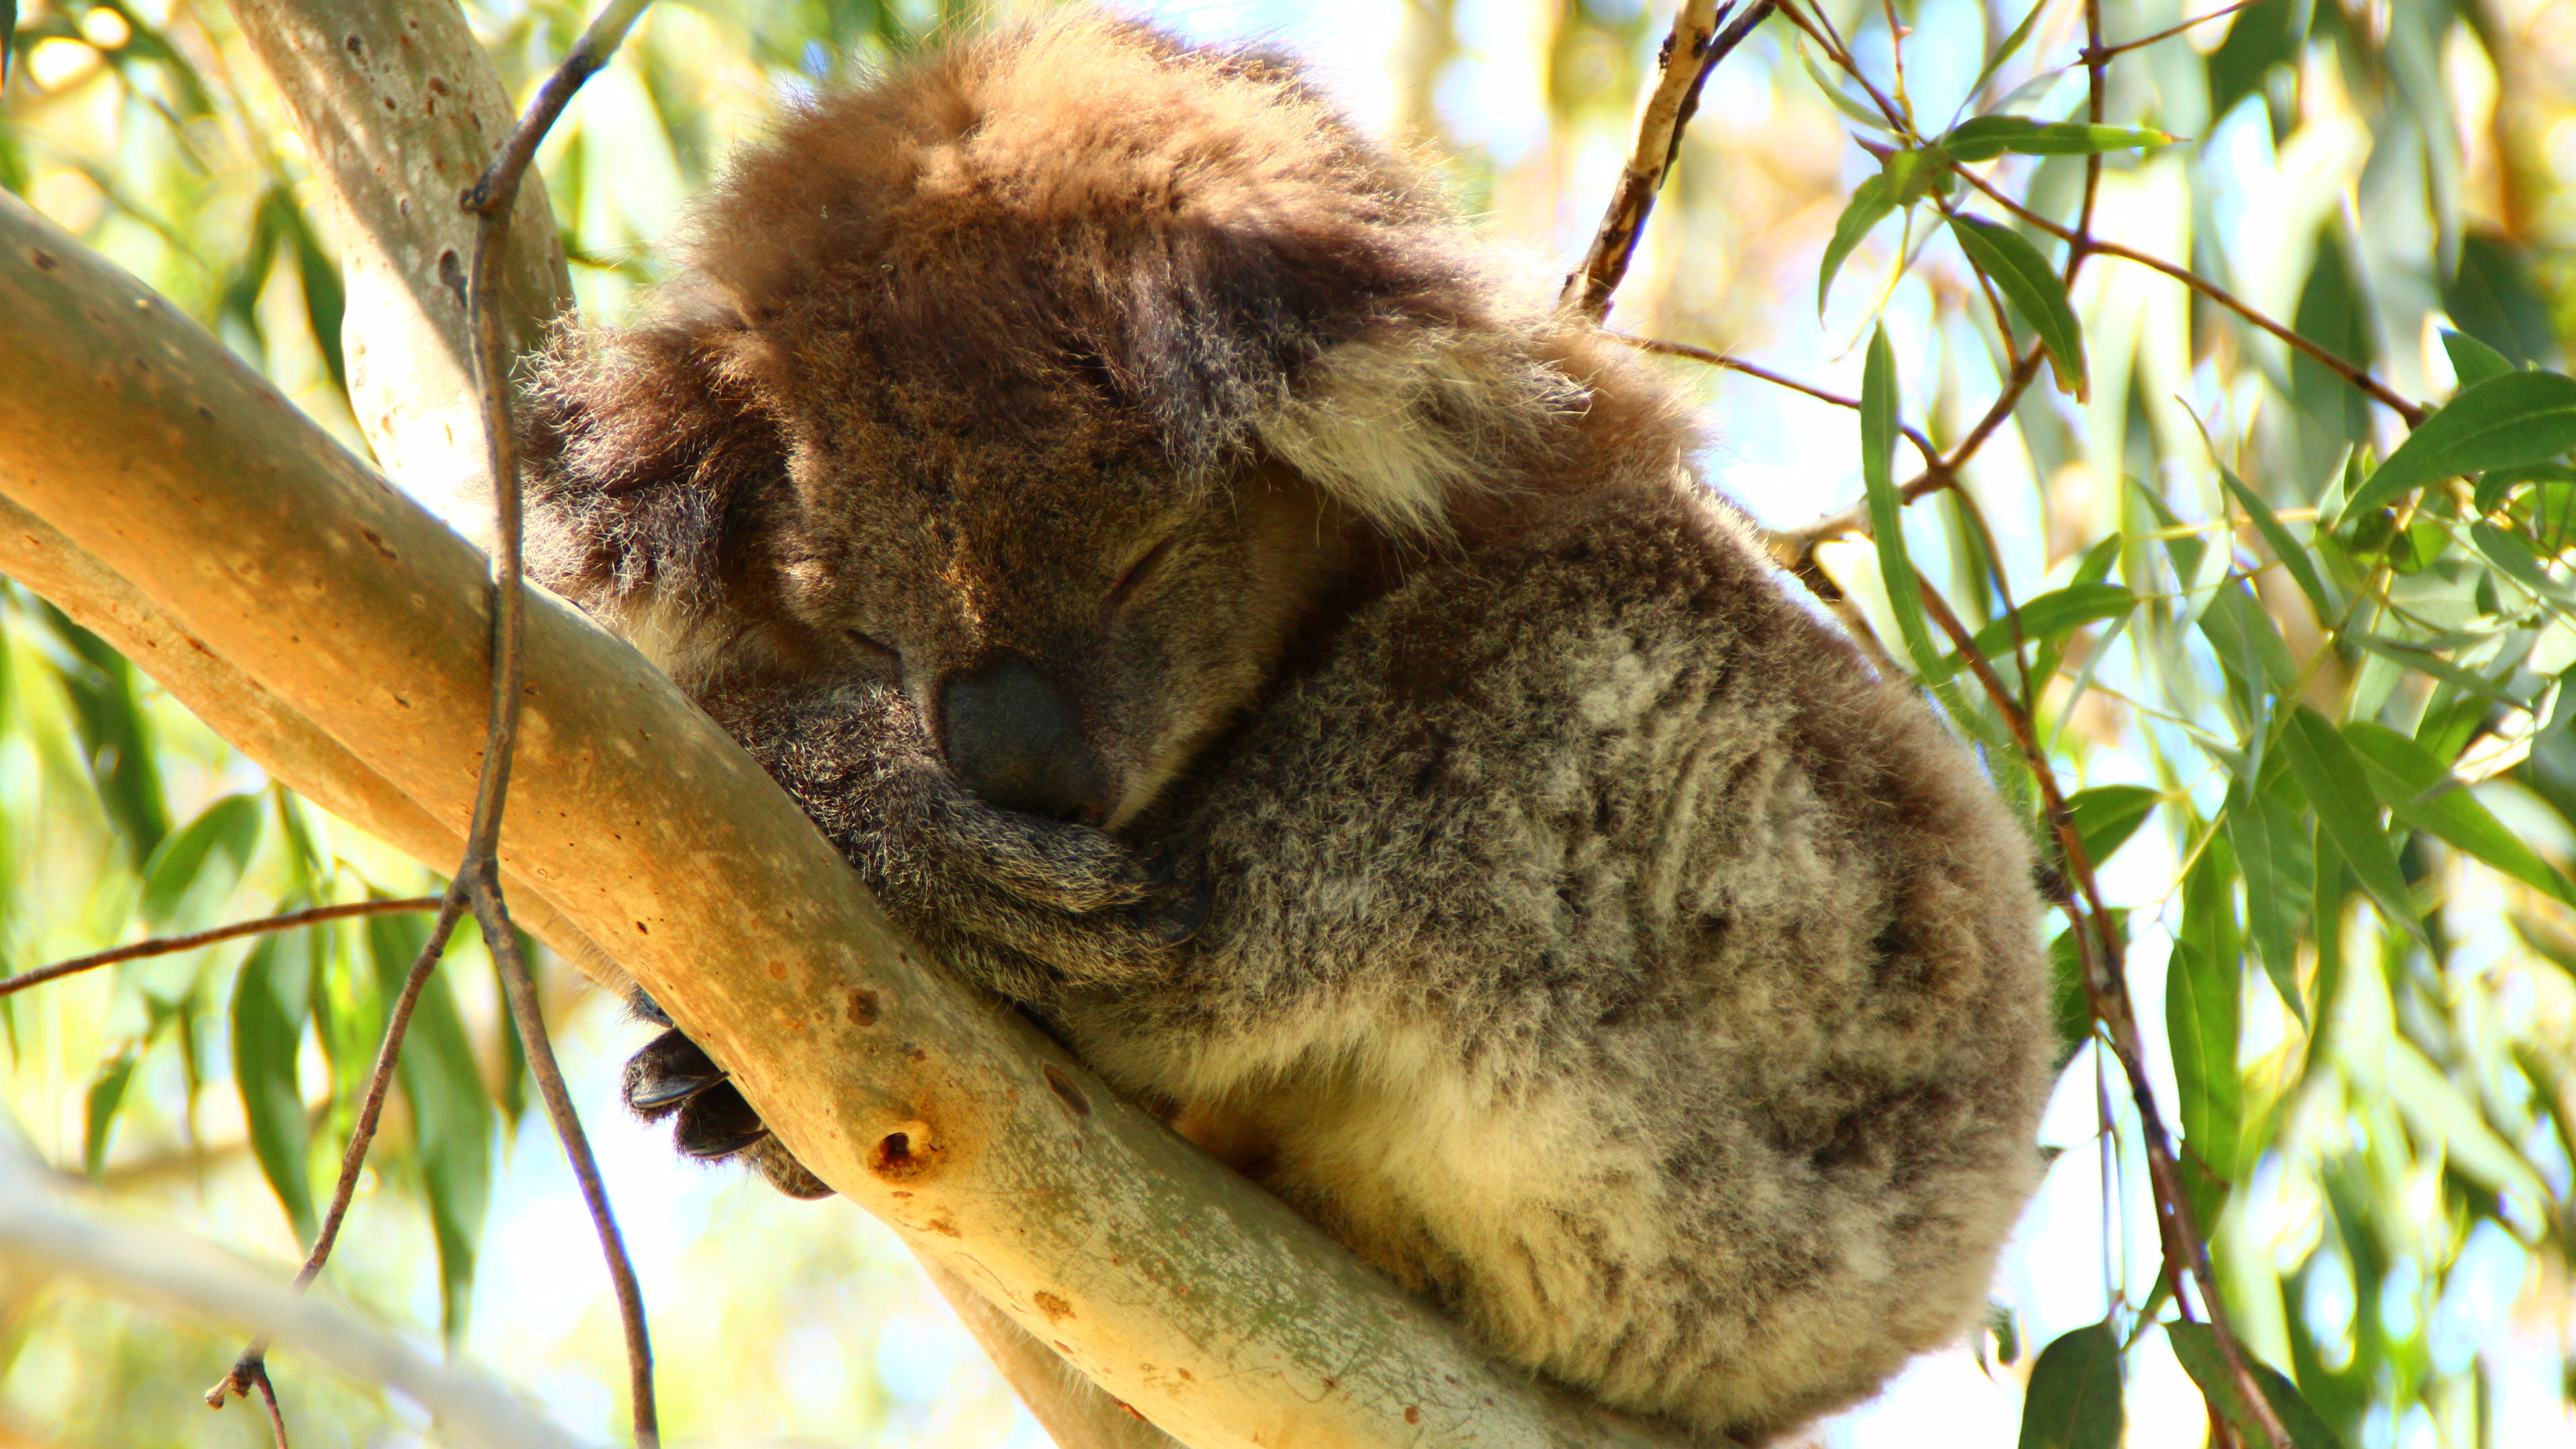 naturreise-koalaschutz-australien-schlafender-koala-eukalyptus-natucate